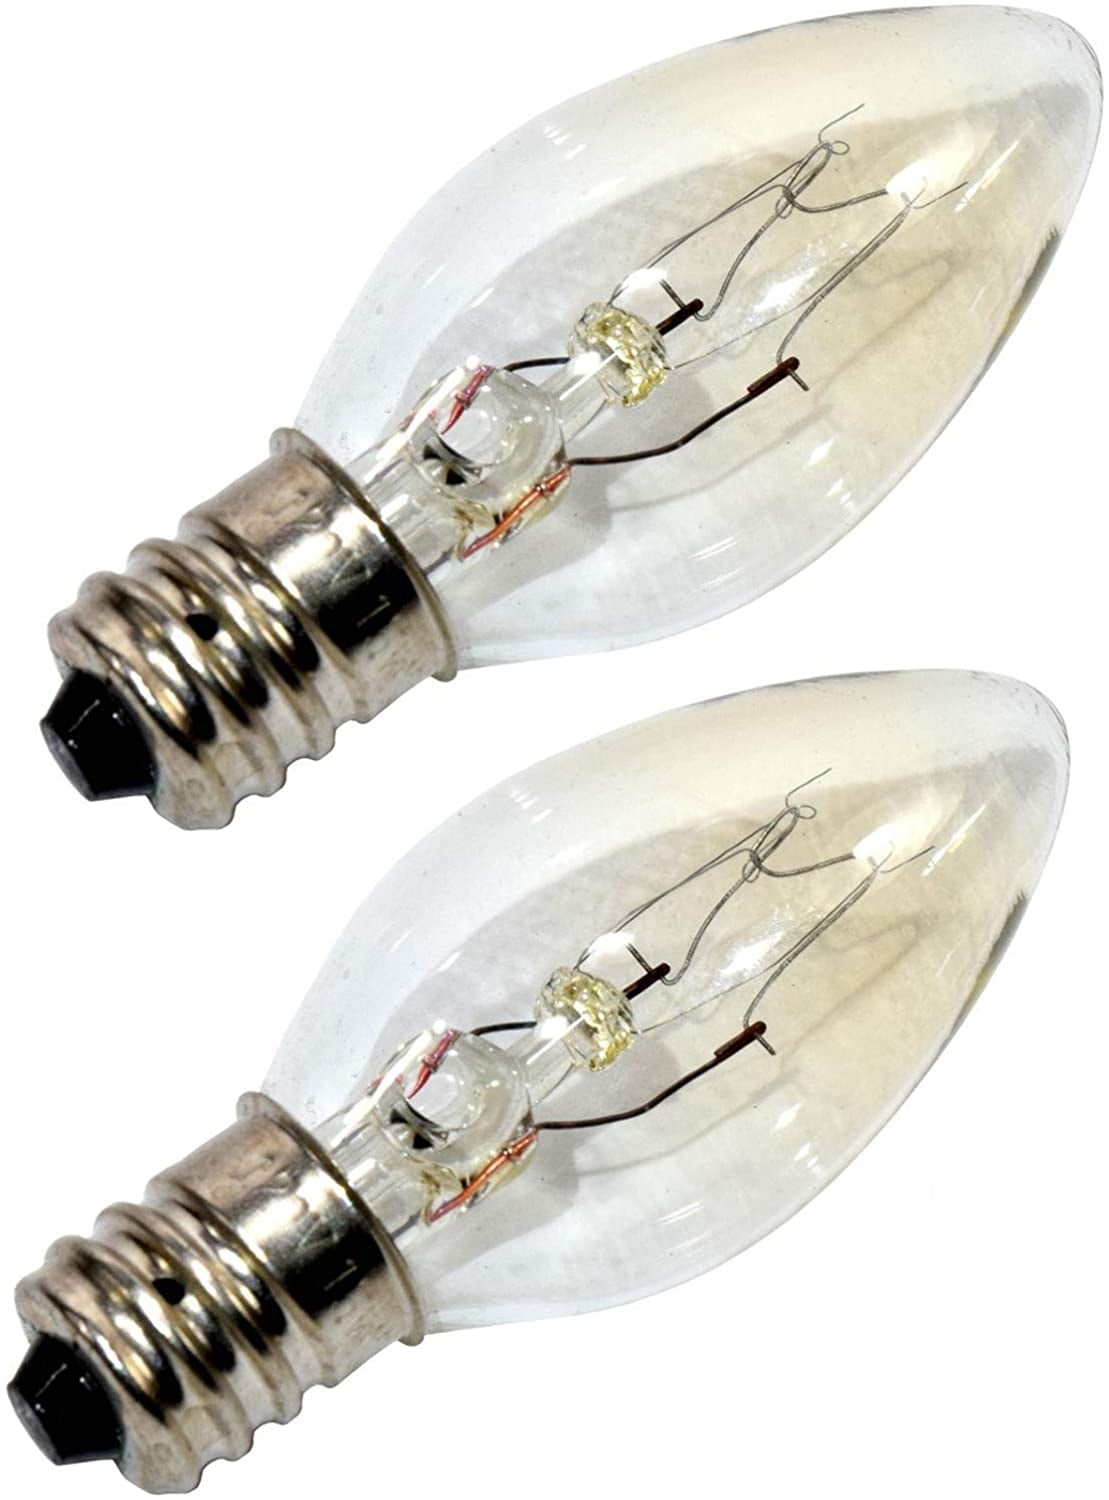 Night Light Bulbs Replaces 15Watt Plug-in Wax Warmer Bulbs 4pk 